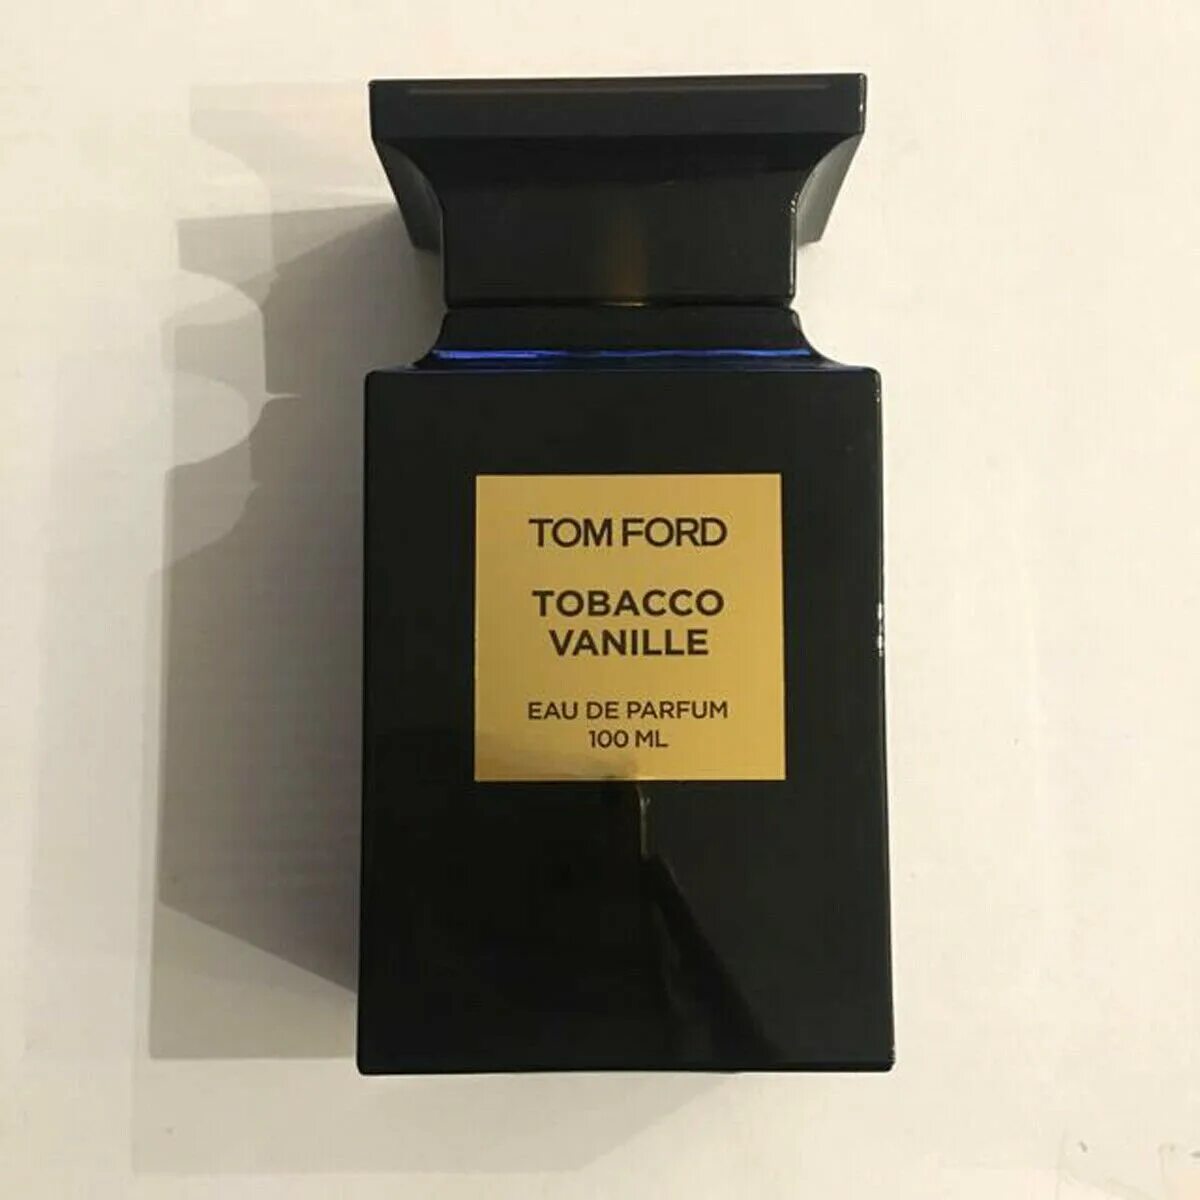 Tom Ford Tobacco Vanille 100ml. Tom Ford Tobacco Vanille 100. Tom Ford Tobacco Vanille. Том Форд Тобакко ваниль.